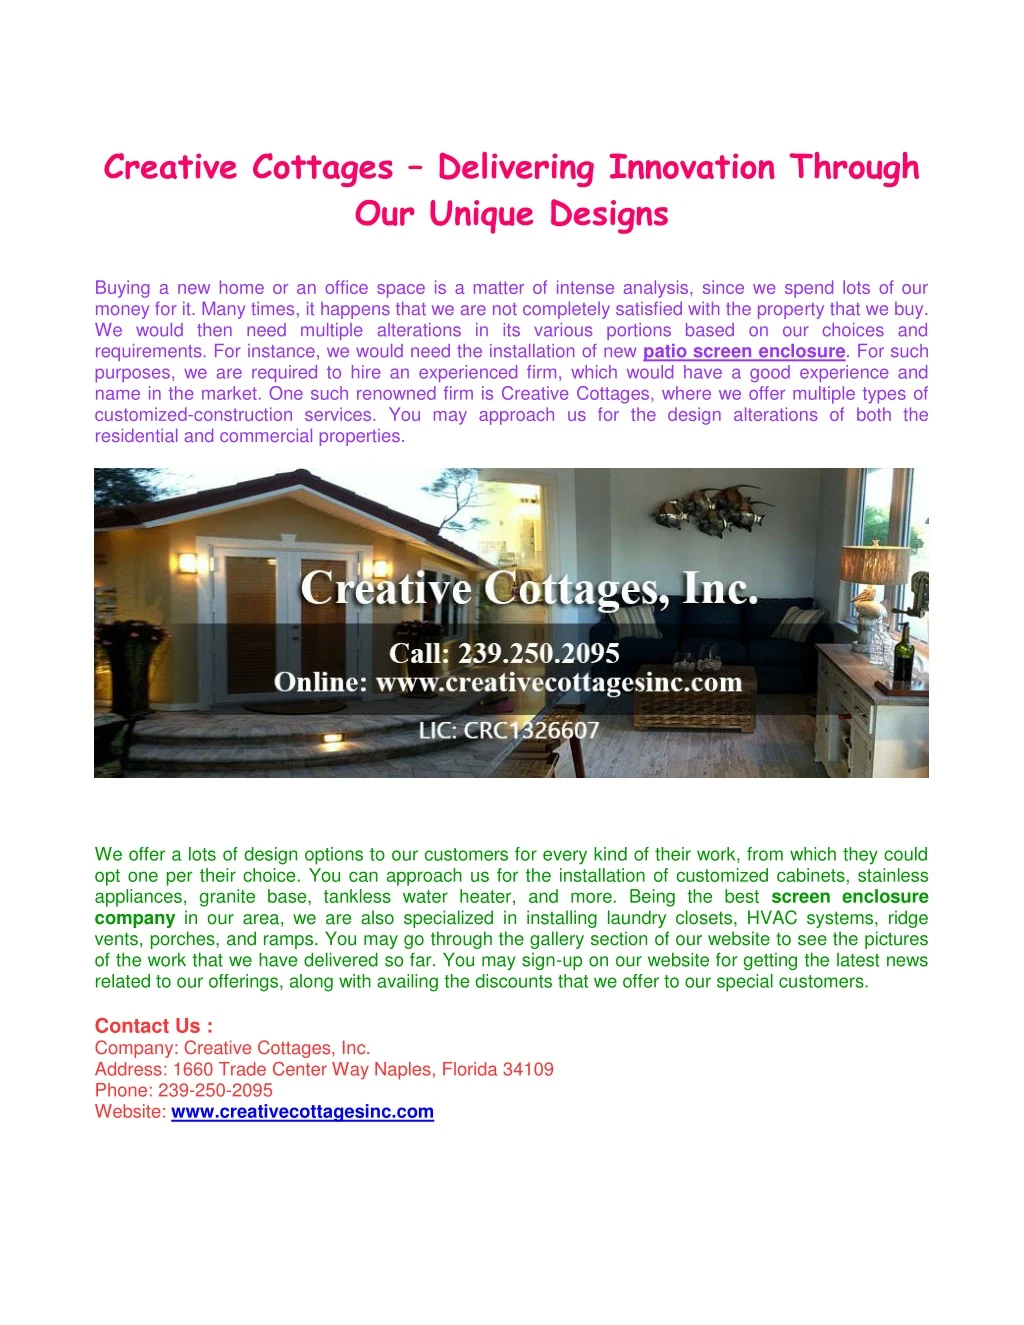 creative cottages delivering innovation through